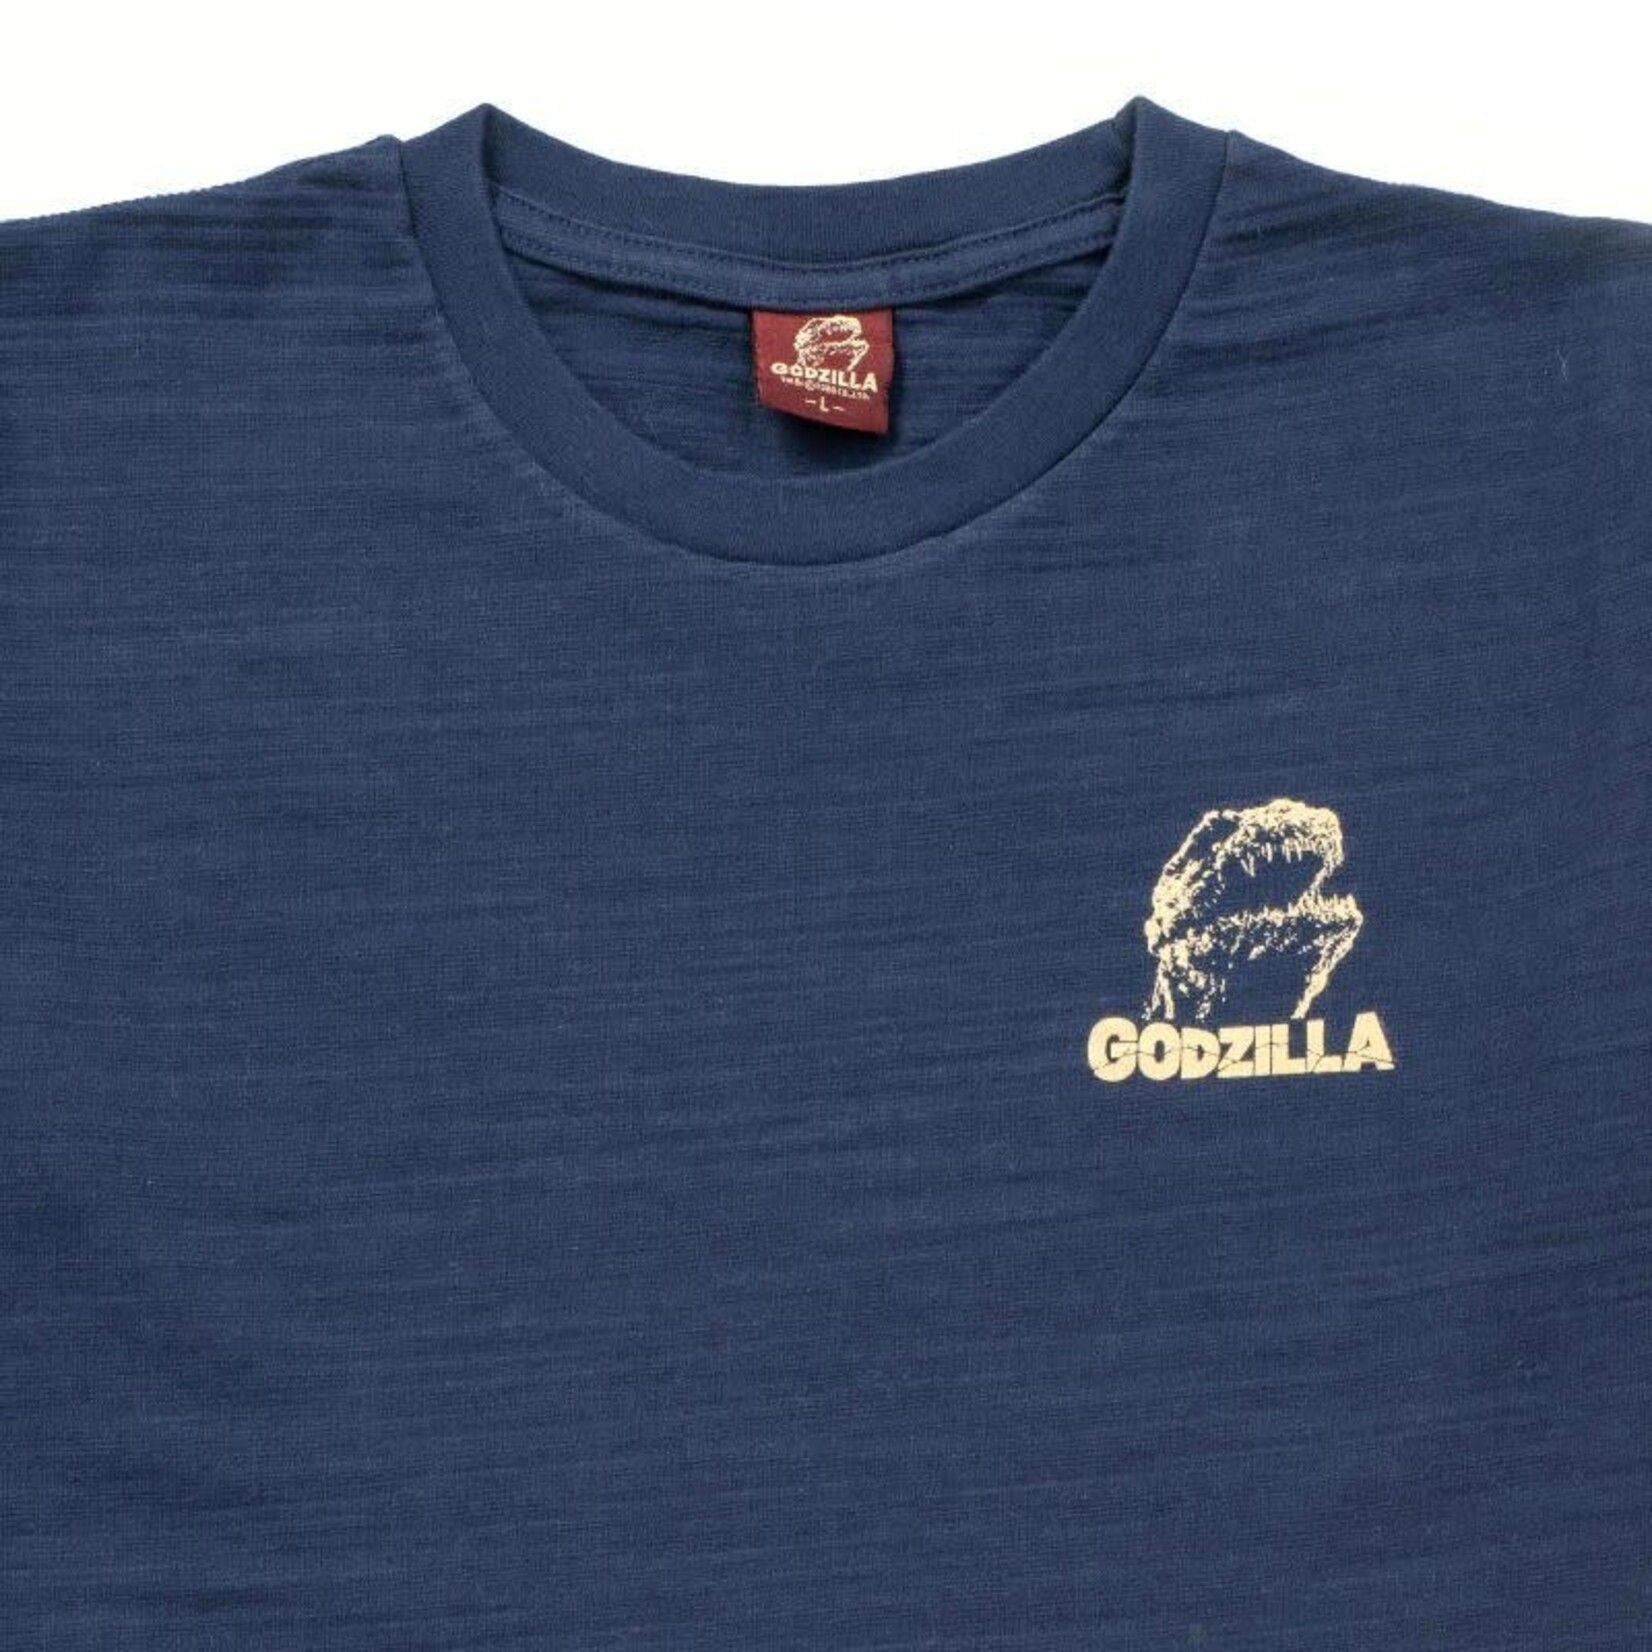 Toho Co. LTD T-Shirt - Godzilla in the Ocean Eating Ships - GZUT-020